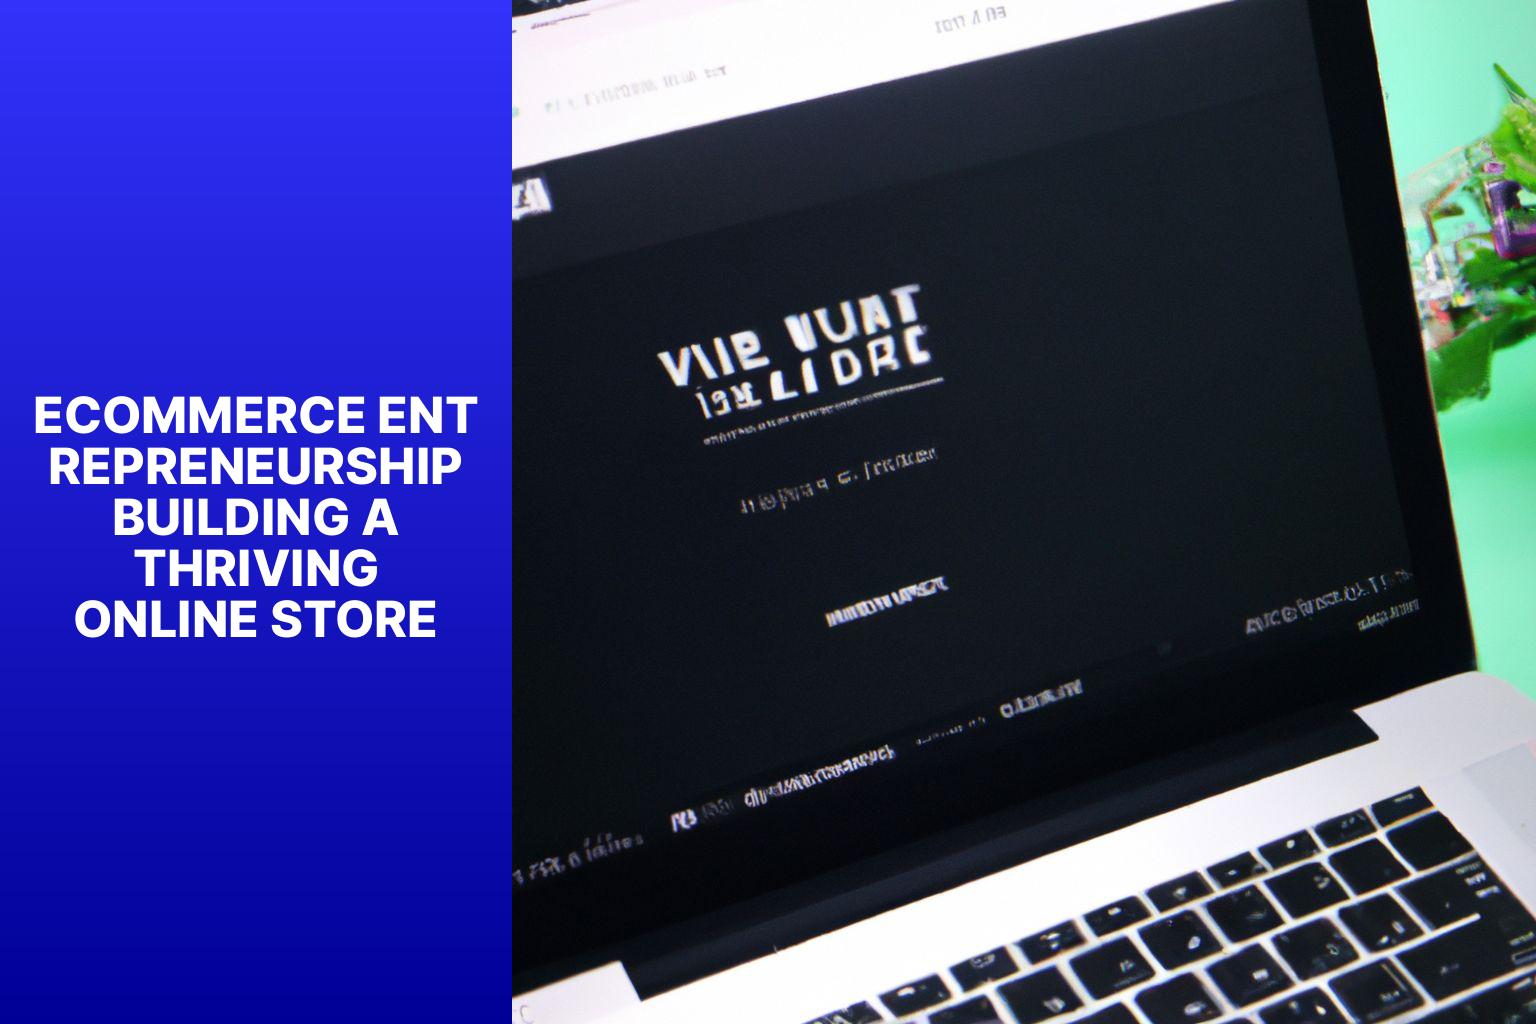 ECommerce Entrepreneurship Building a Thriving Online Store